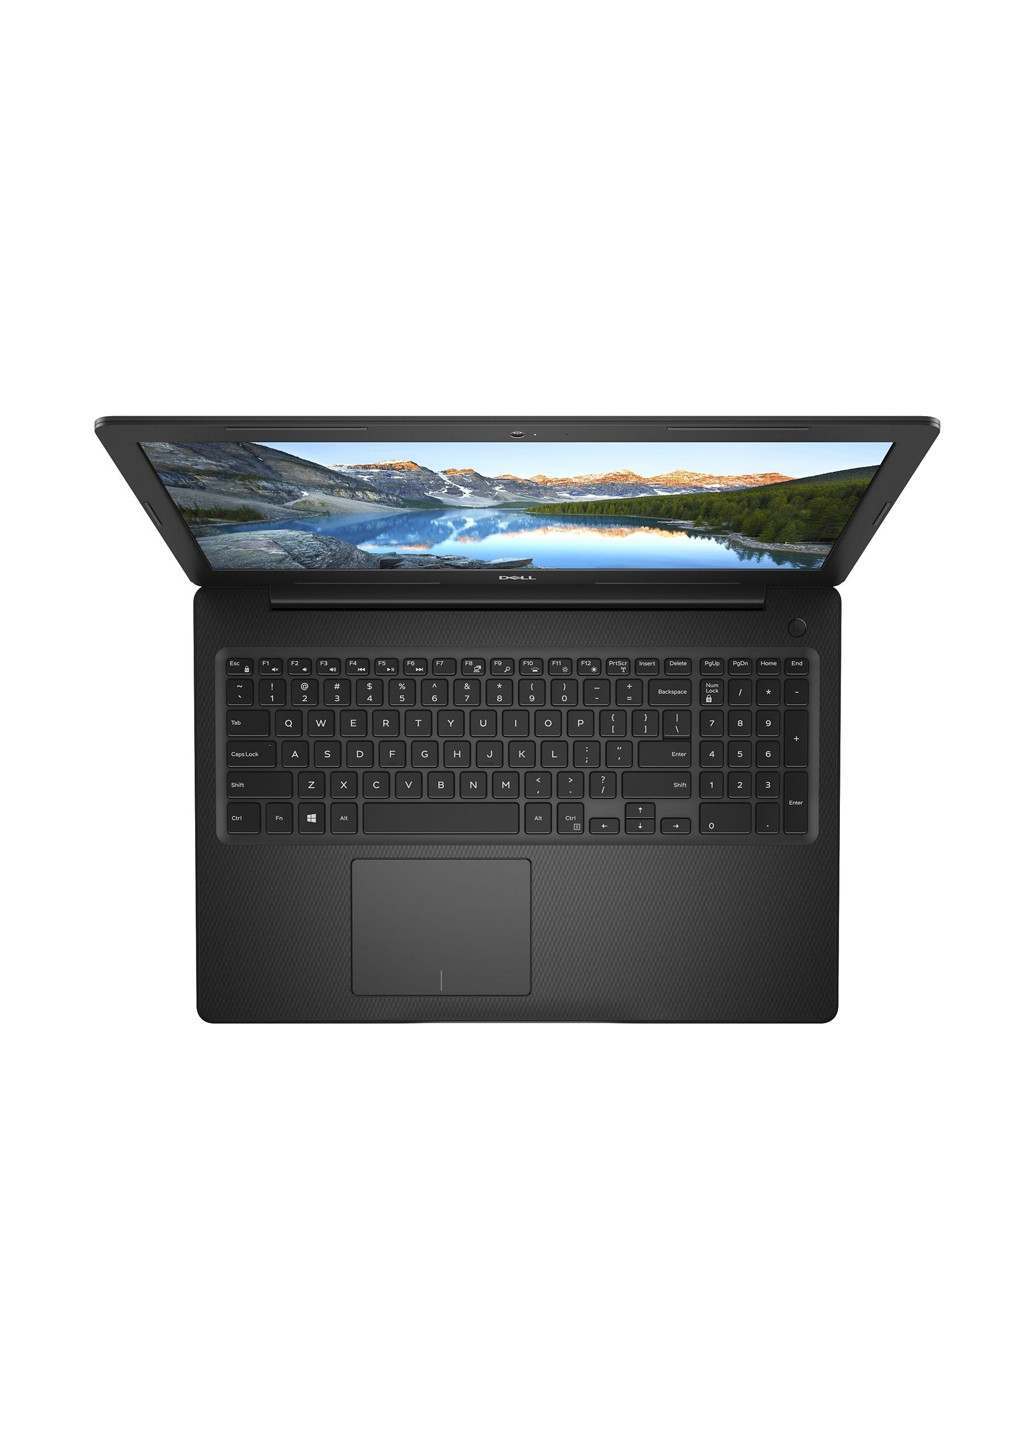 Ноутбук Dell Inspiron 3580 (I355810DDW-75B) Black чёрный